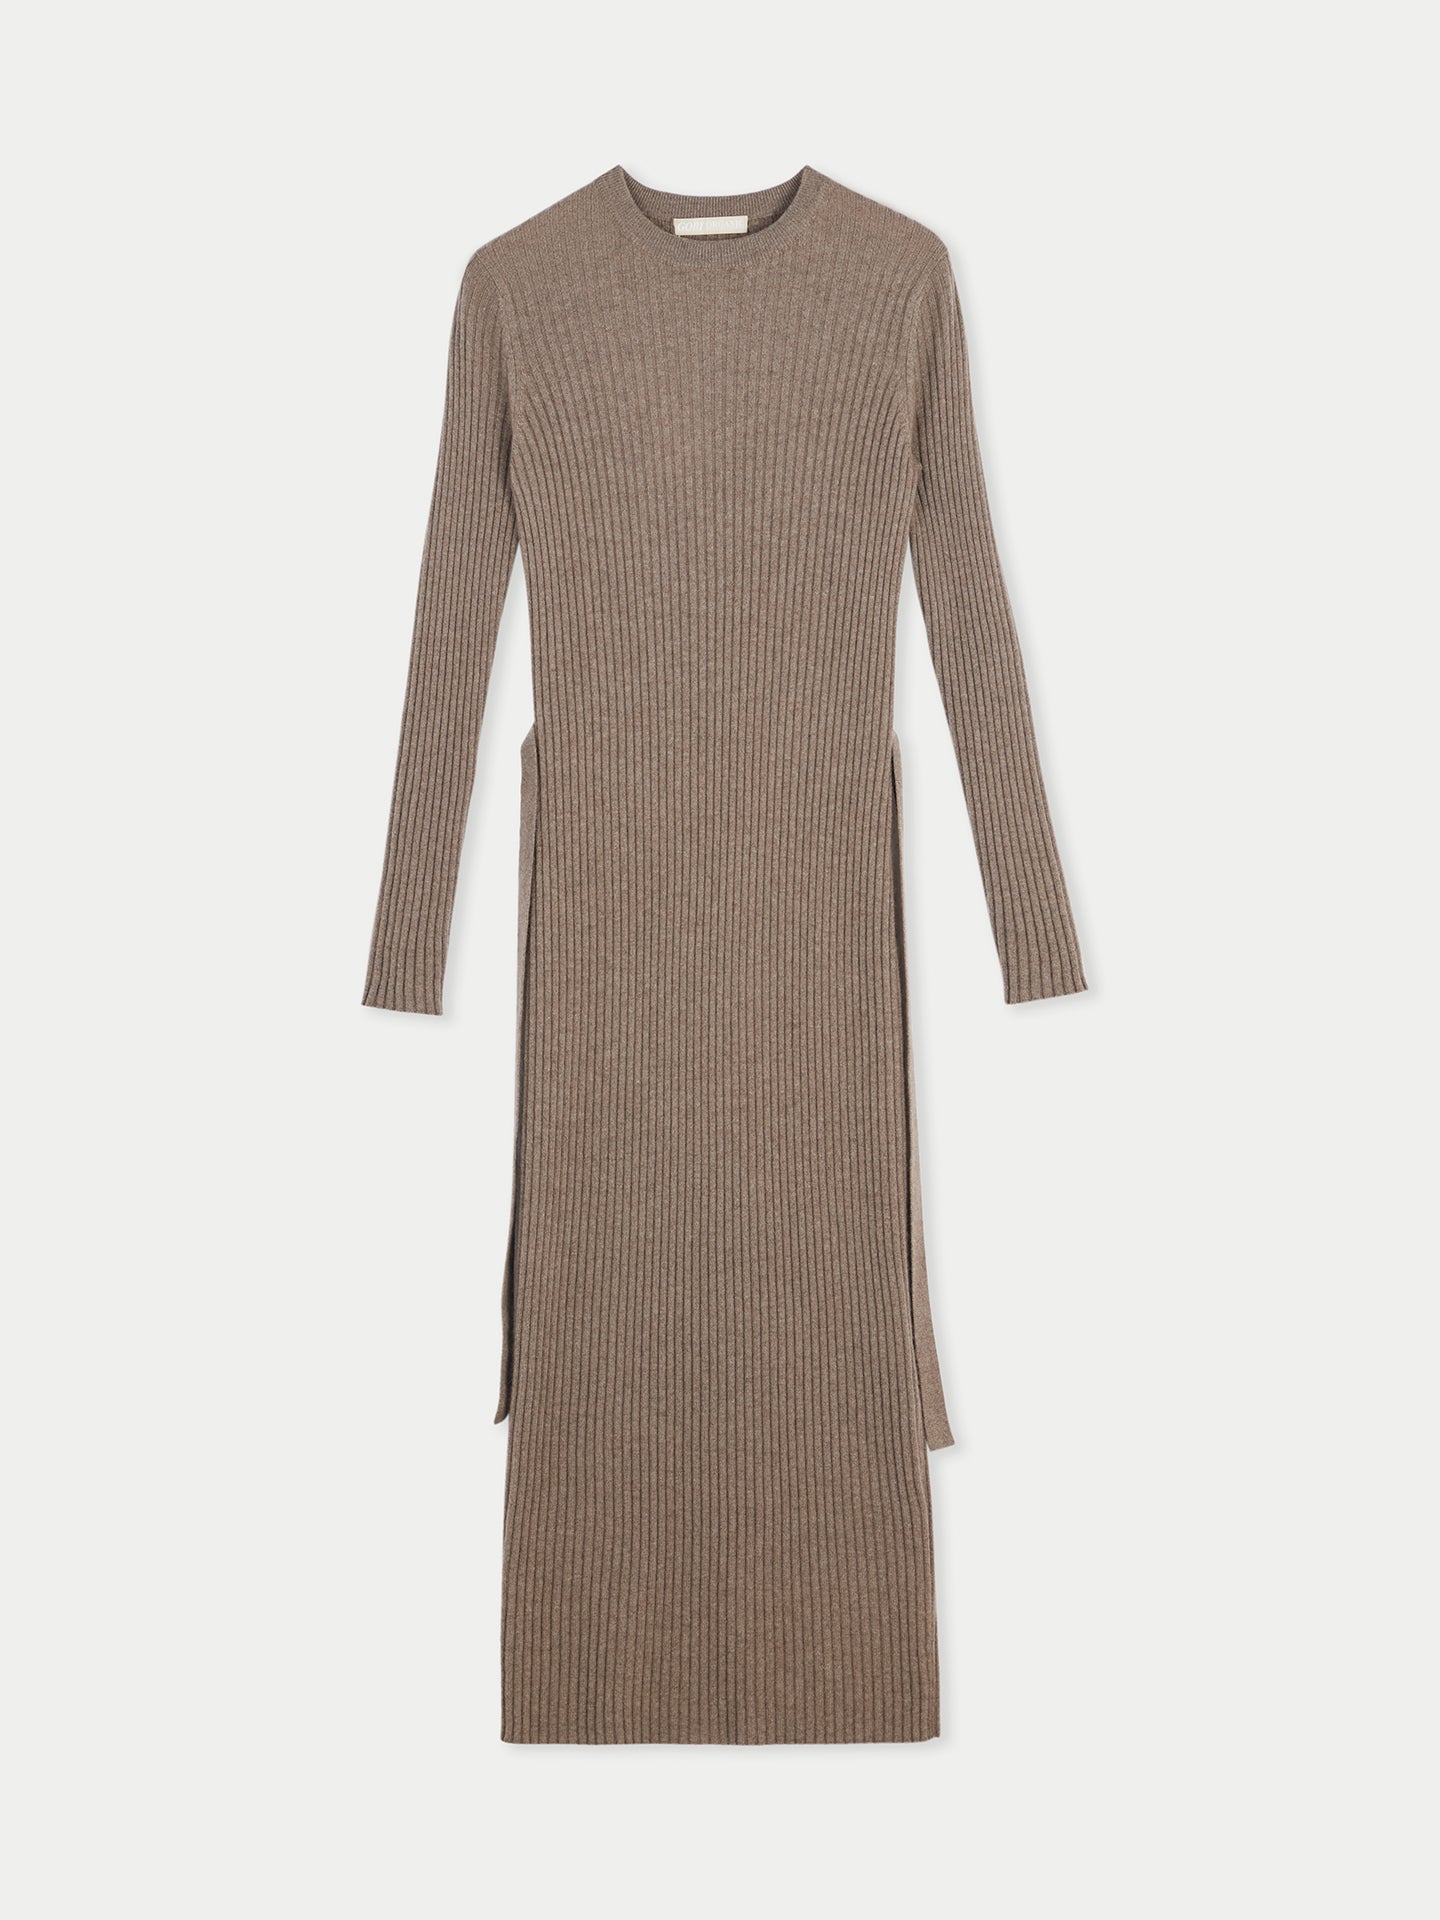 Women's Organic Cashmere Knit Dress with Belt Taupe - Gobi Cashmere